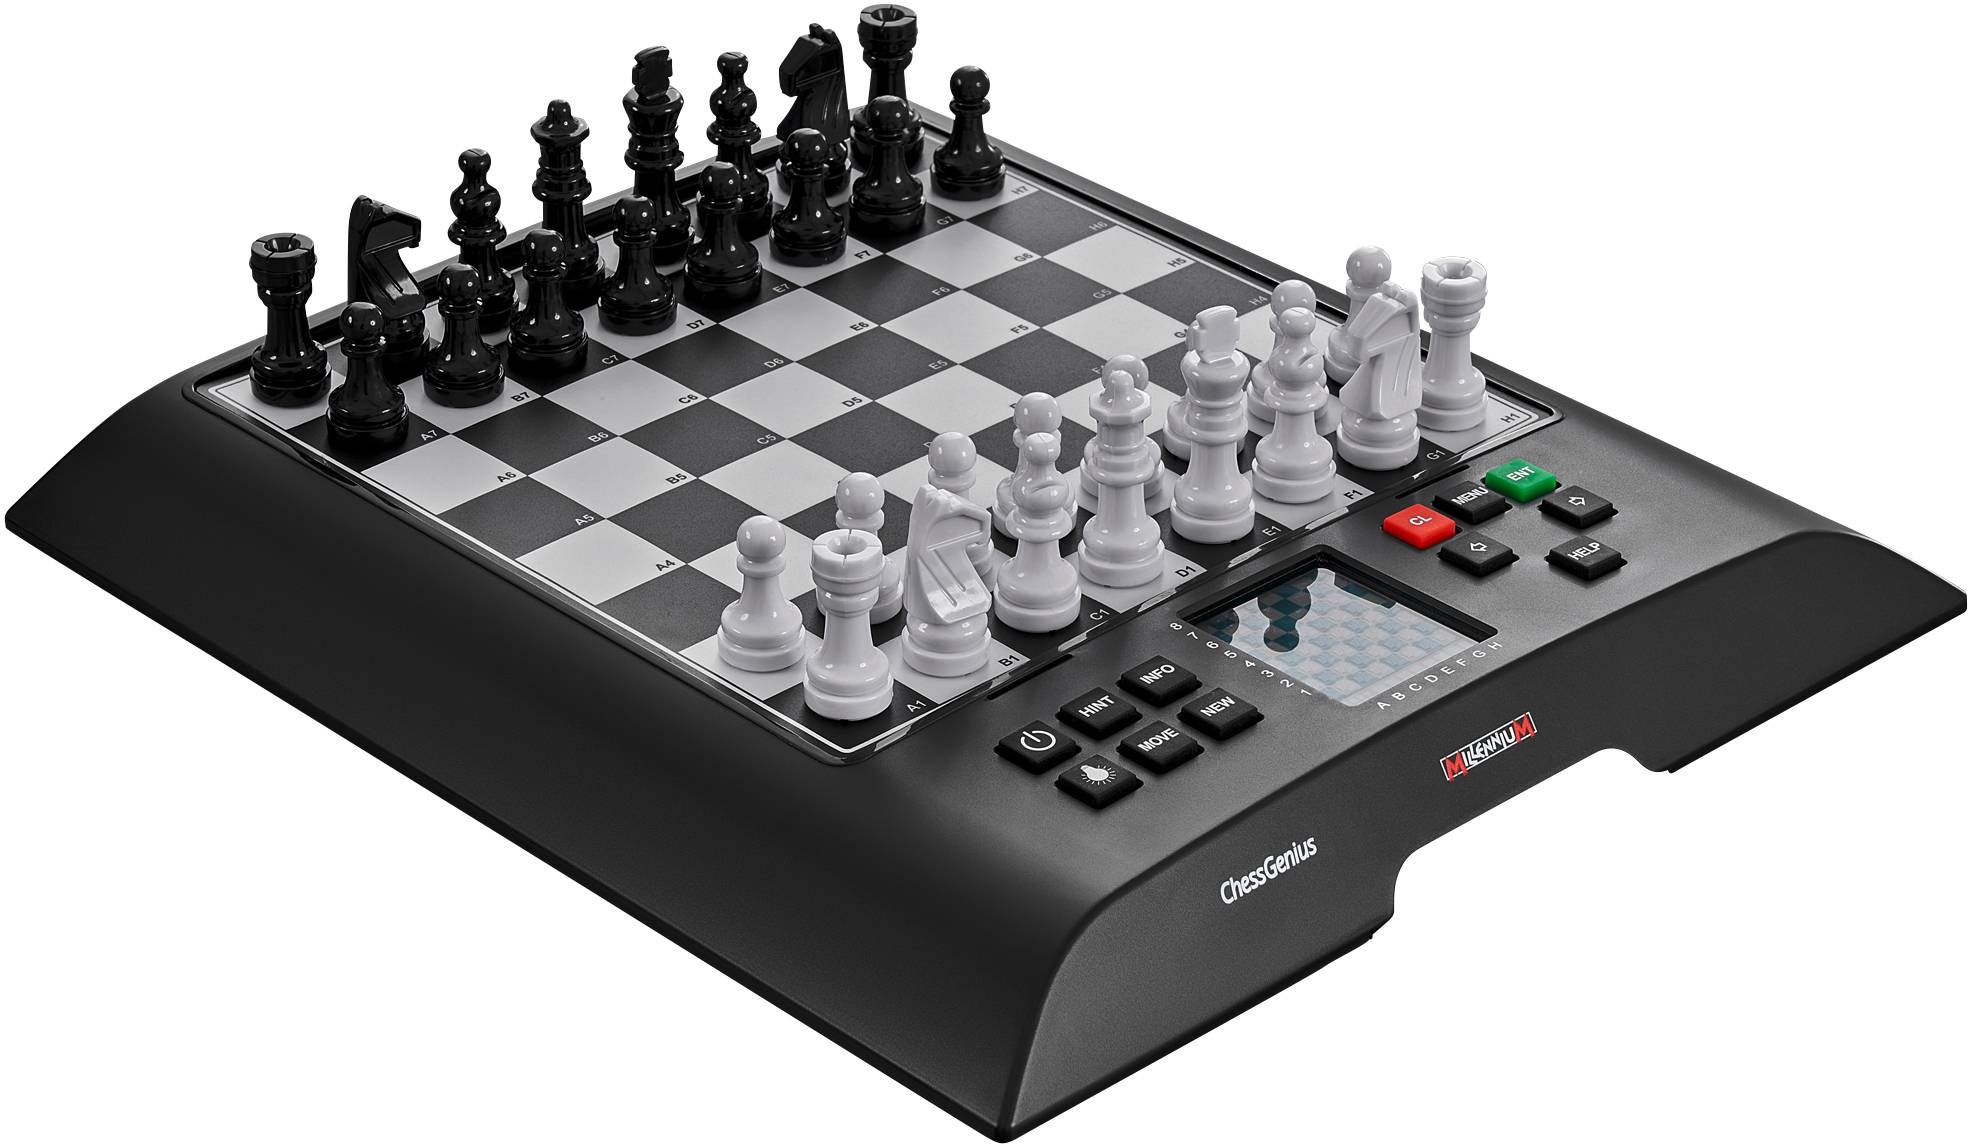 unbeatable chess computer online